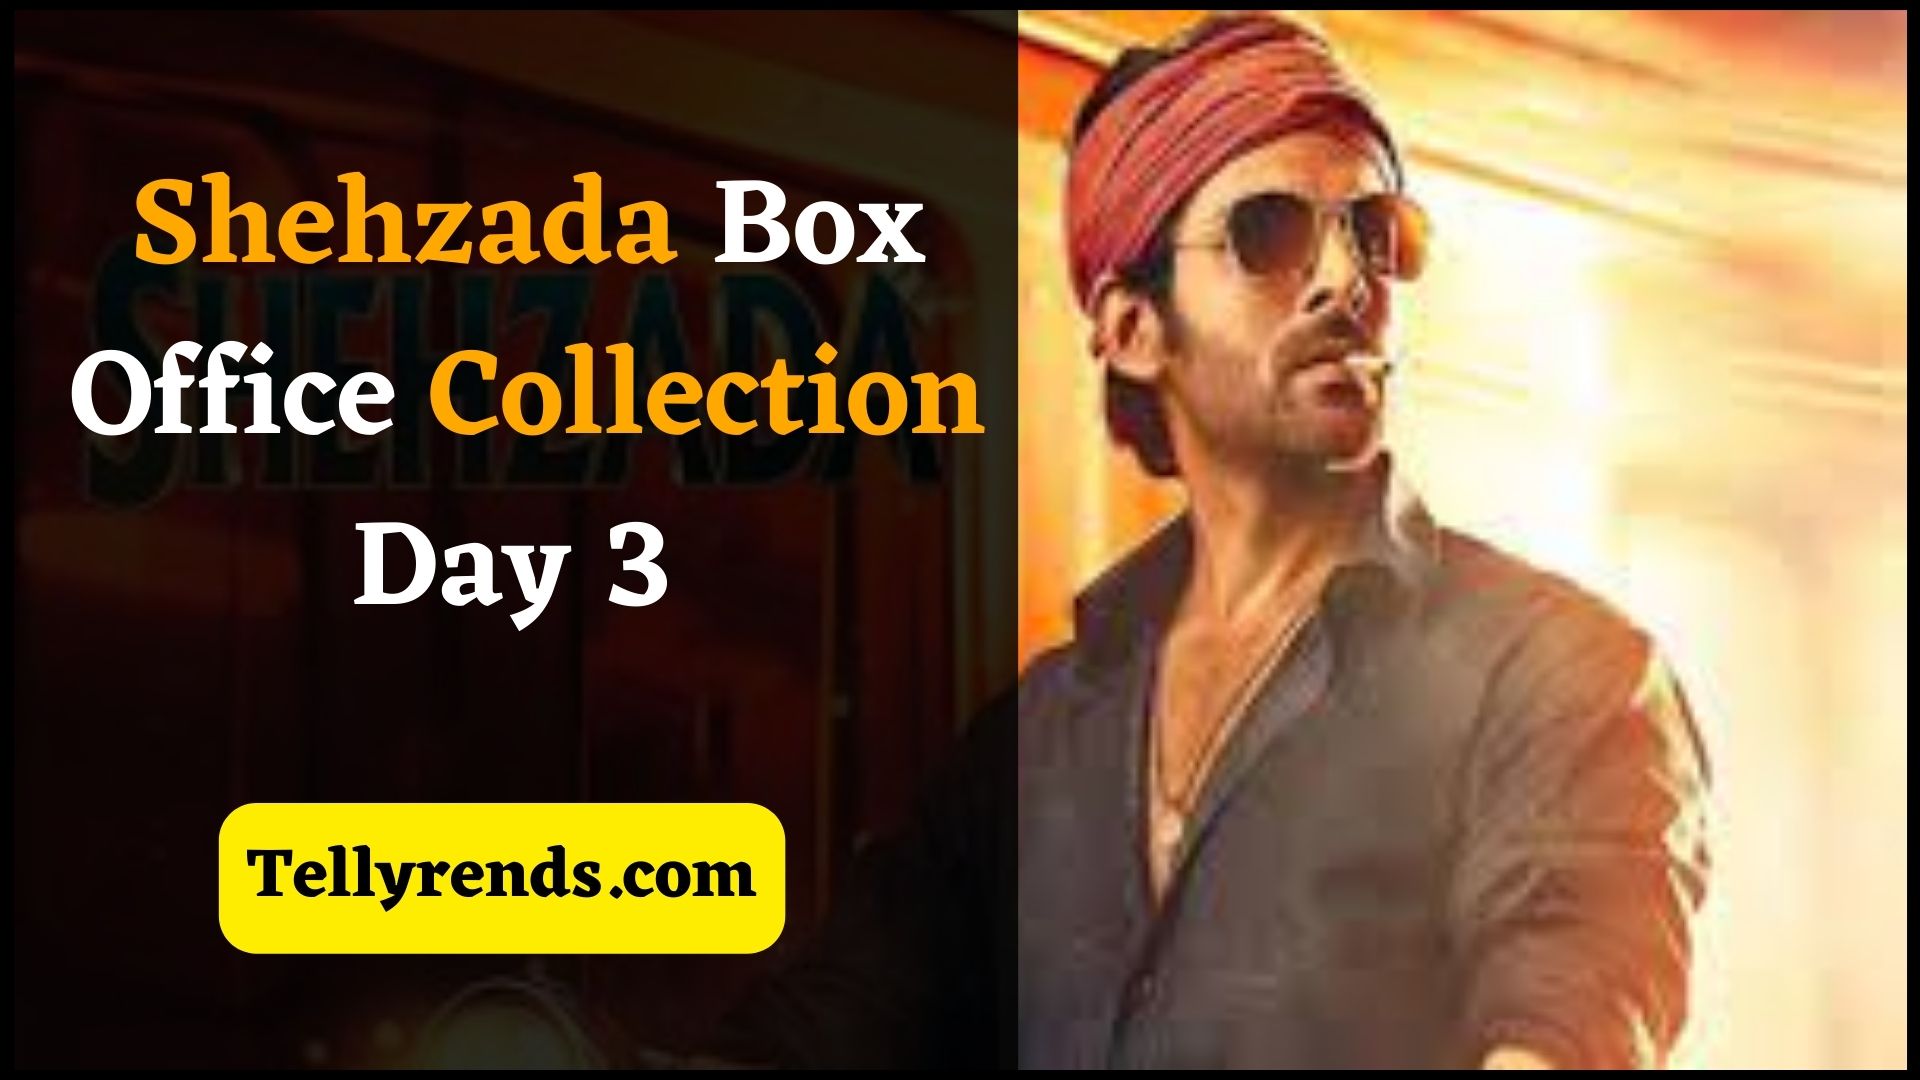 शहजादा बॉक्स ऑफिस कलेक्शन डे 3 | Shehzada Box Office Collection Day 3